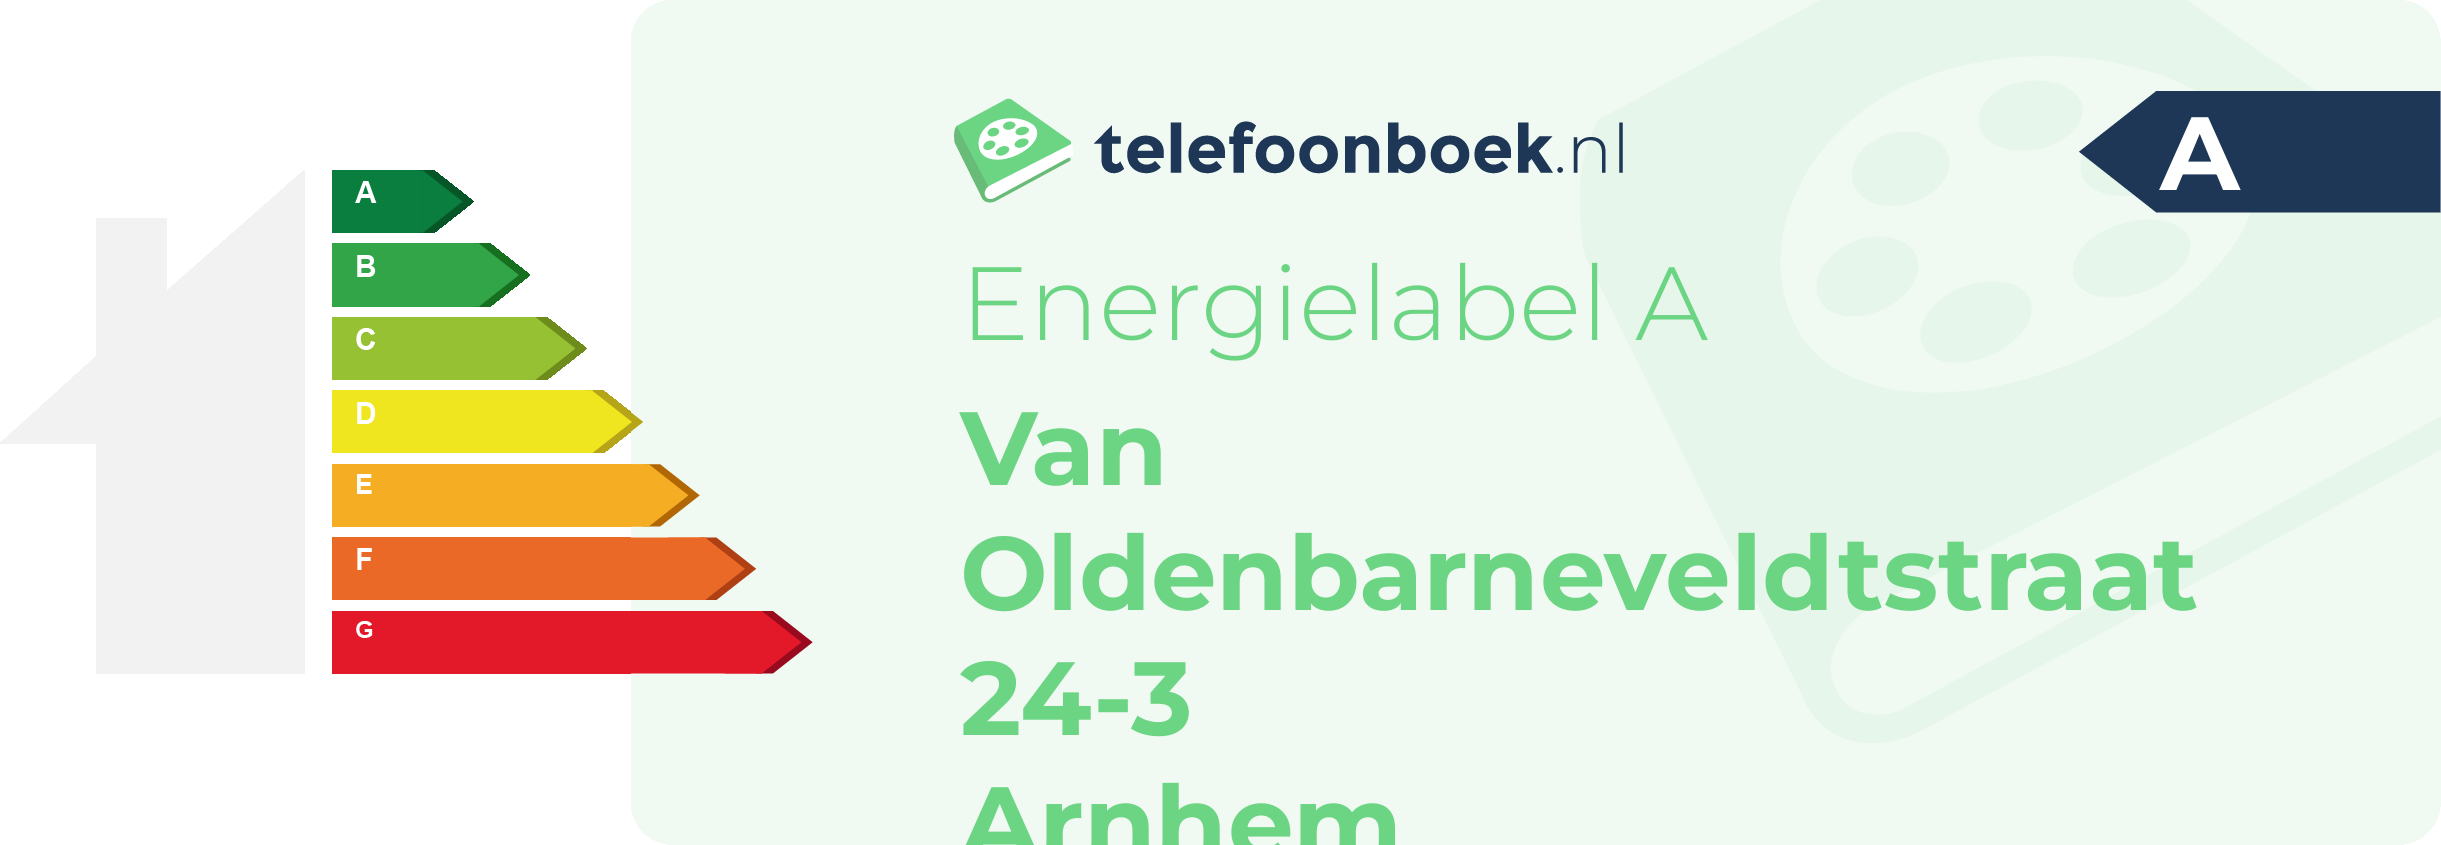 Energielabel Van Oldenbarneveldtstraat 24-3 Arnhem